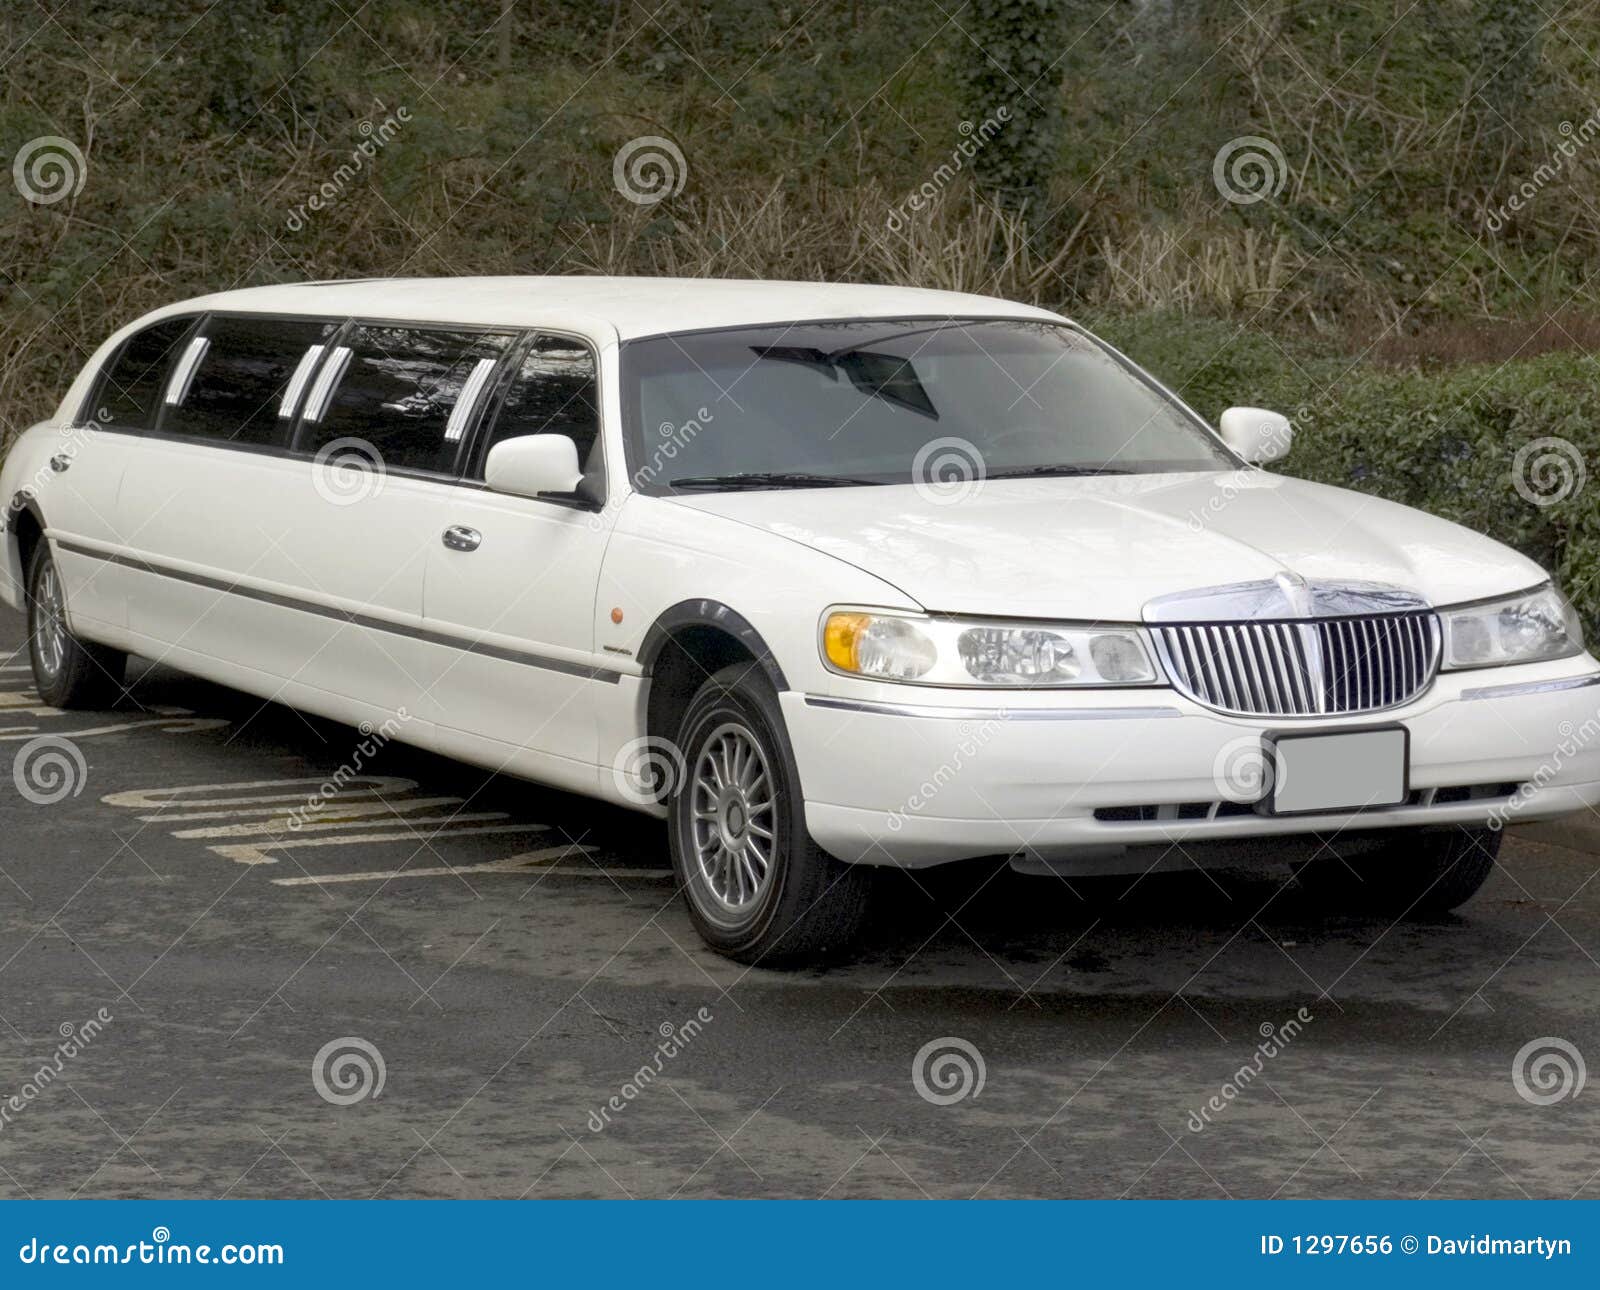 Stretch Limo Limousine Big Car Royalty Free Stock Image  Image: 1297656